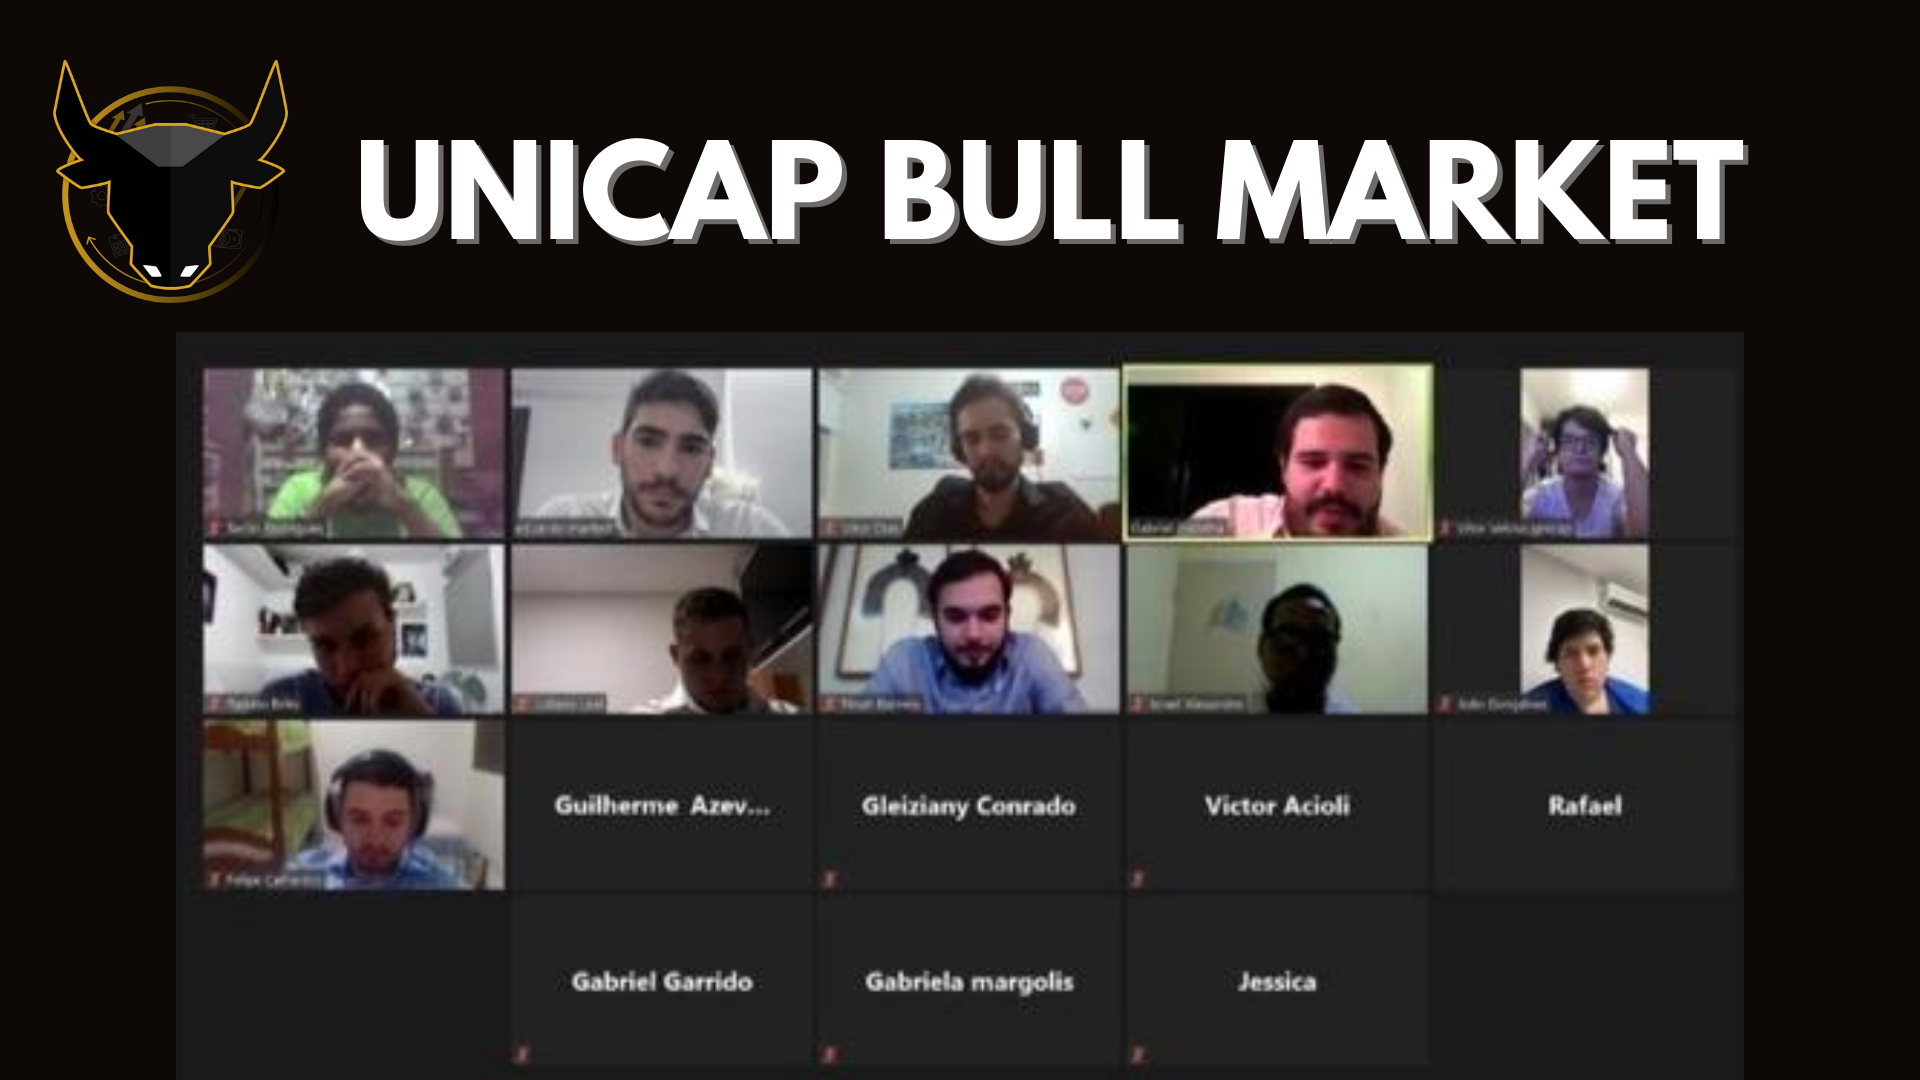 Unicap Bull Market 